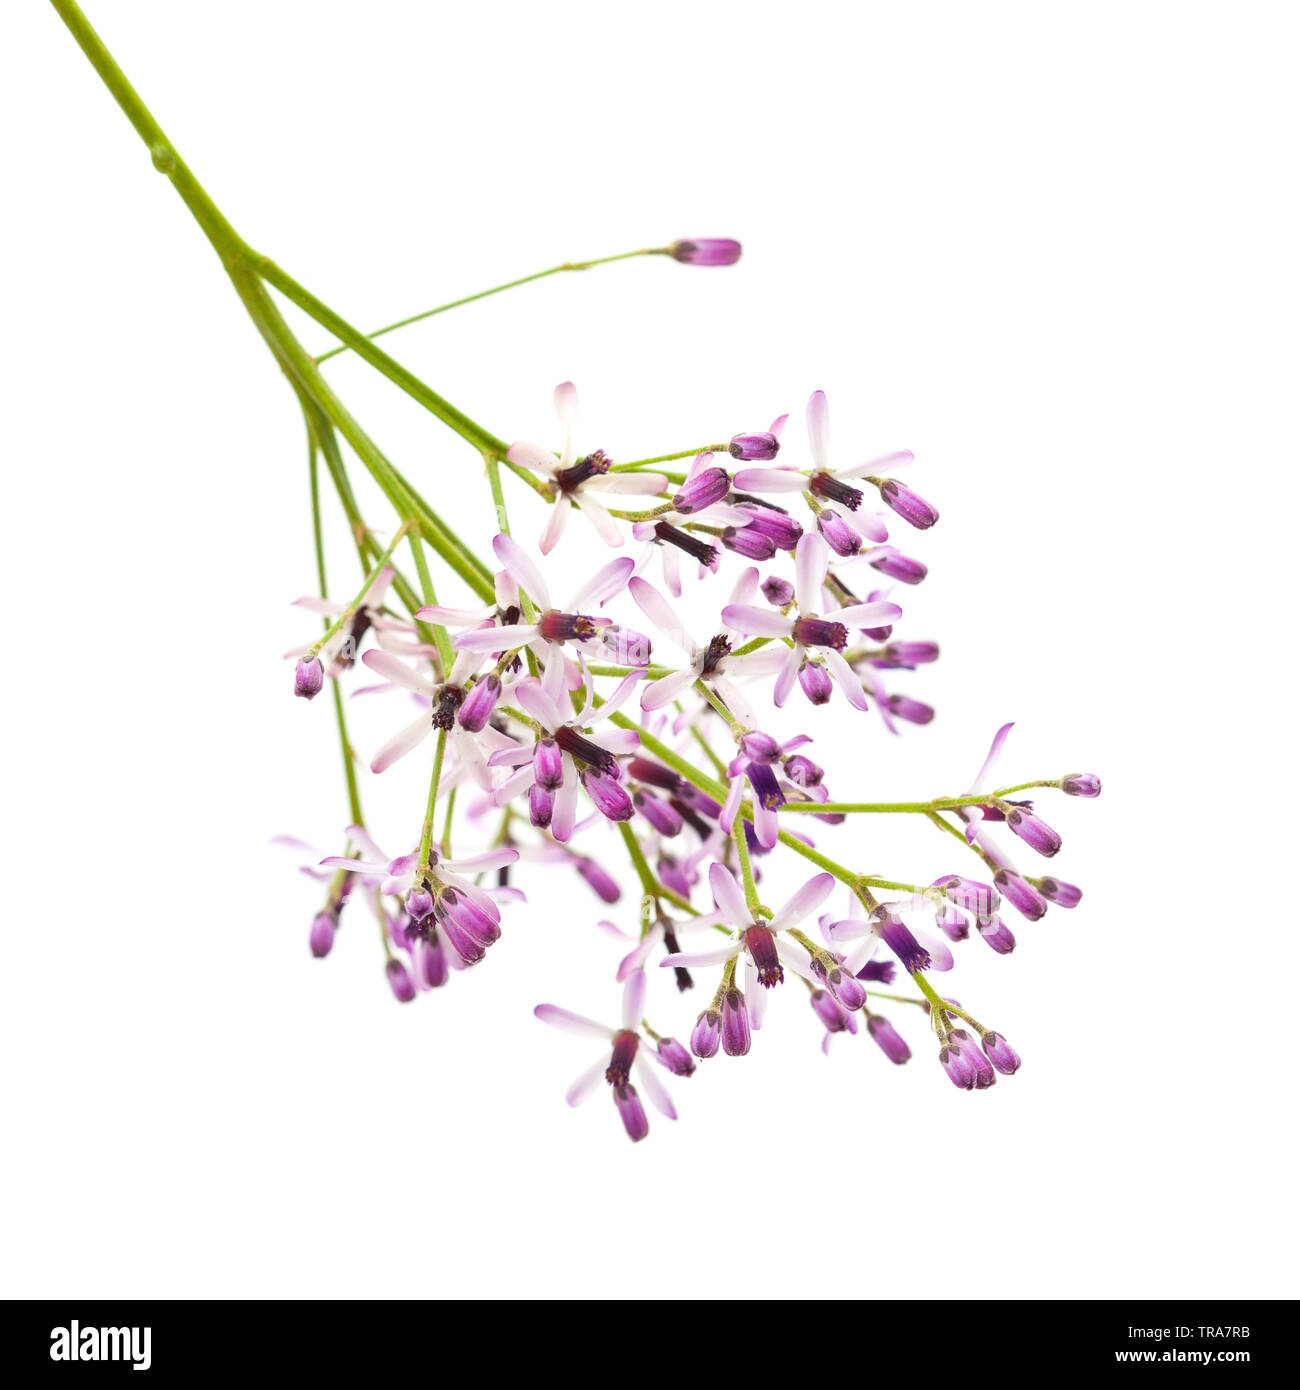 Melia azedarach, AKA chinaberry tree twig with flowers isolated on white Stock Photo